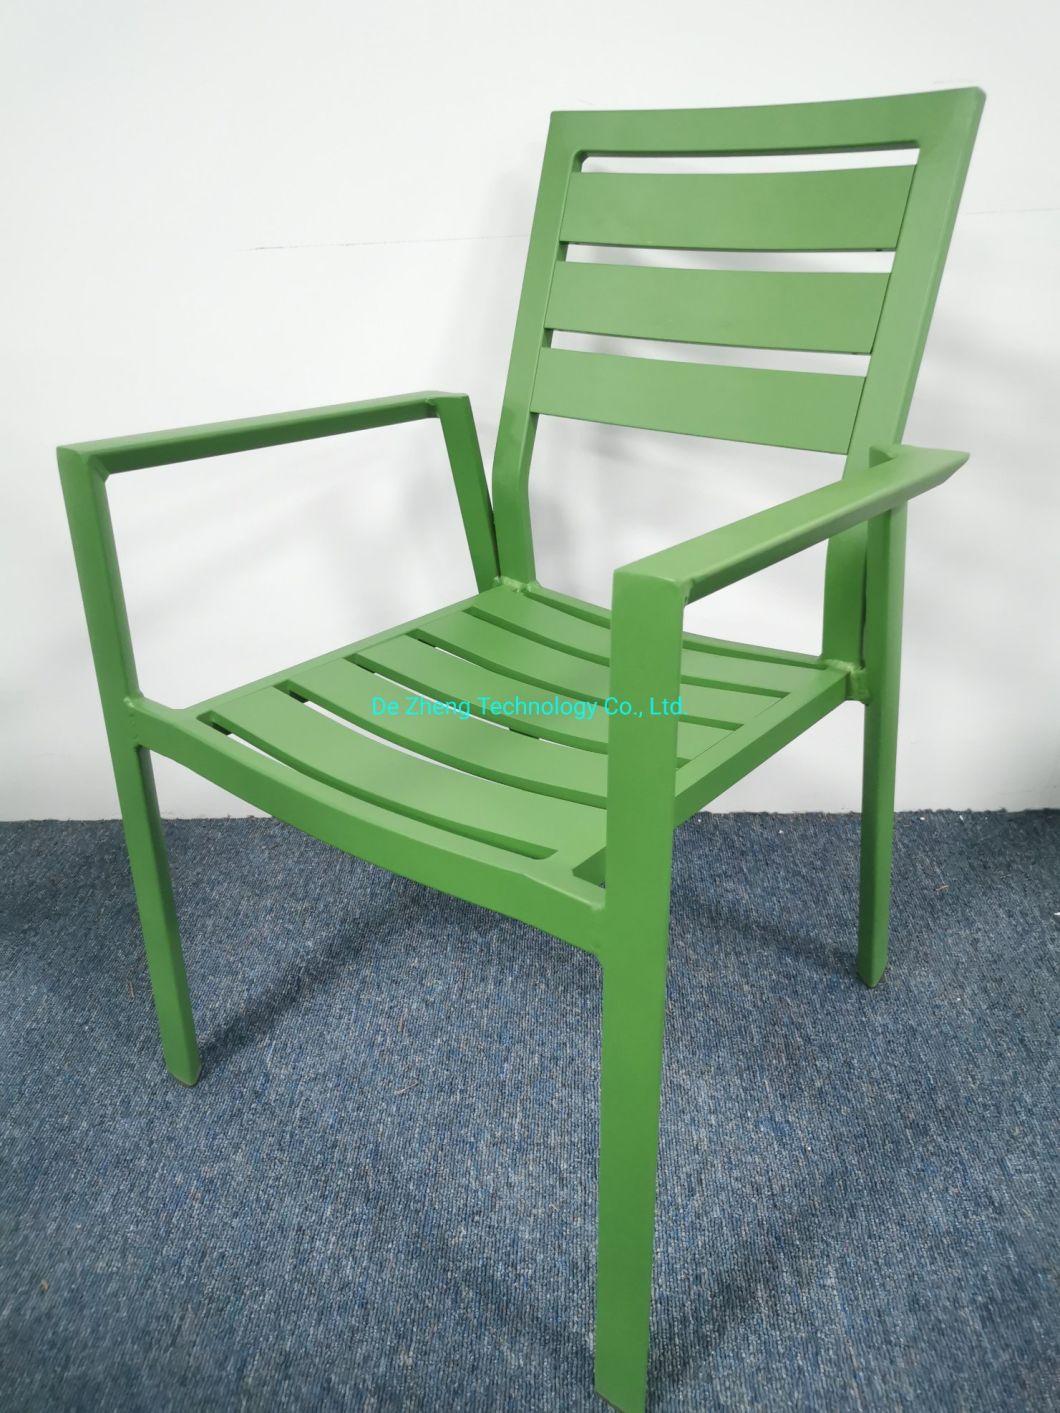 Luxury Modern Colorful Aluminum Outdoor Chairs Garden Aluminum Slats Outdoor Furniture Set